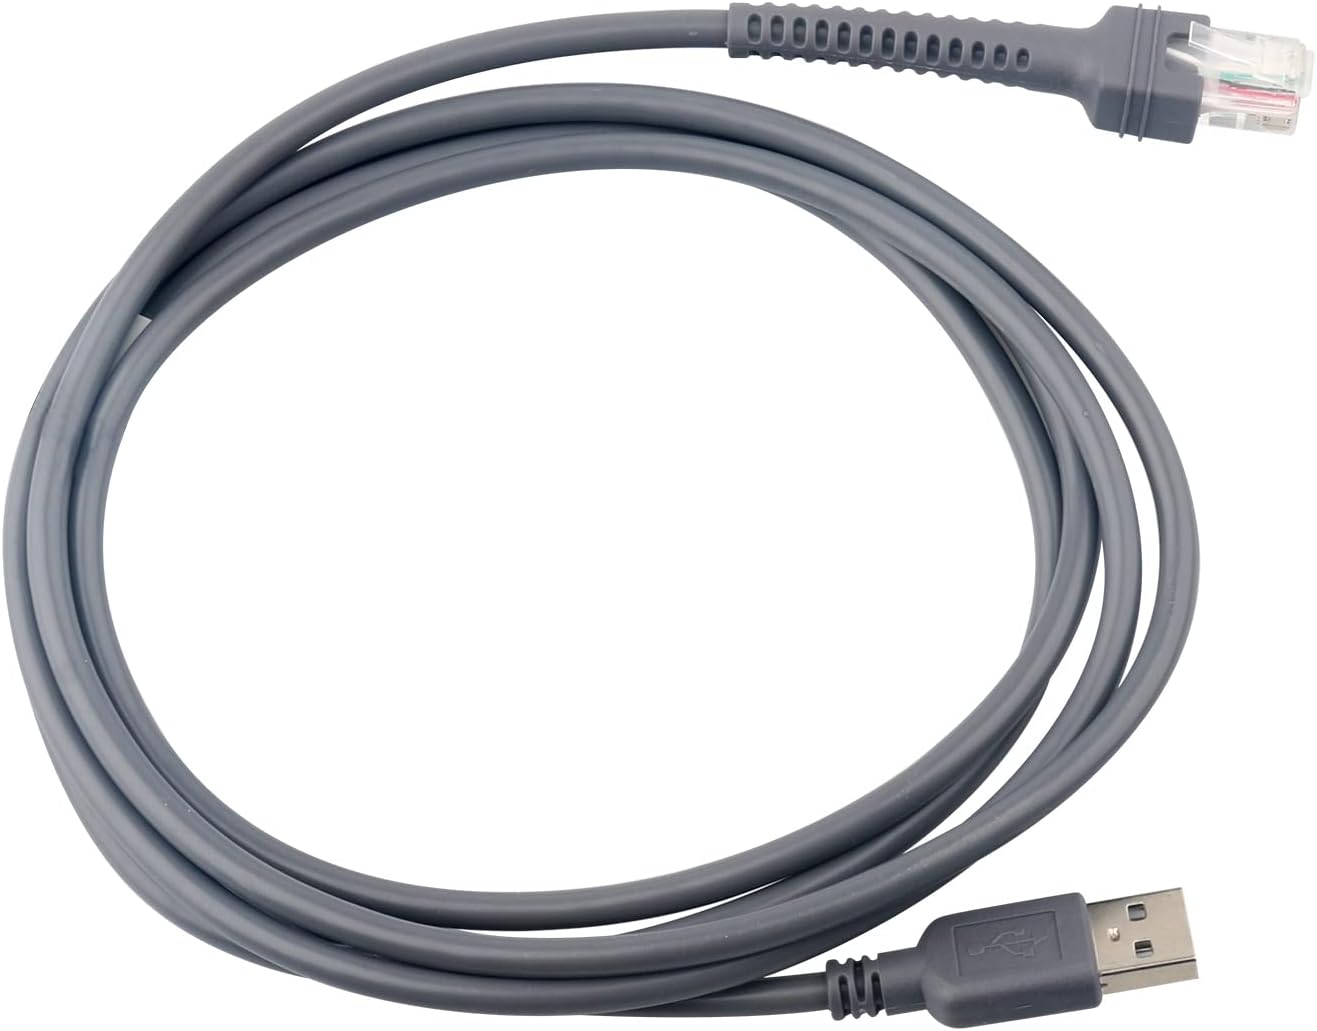 USB to RJ45 Barcode Scanner Cable Compatible for Motorola Symbol Zebra SL2208